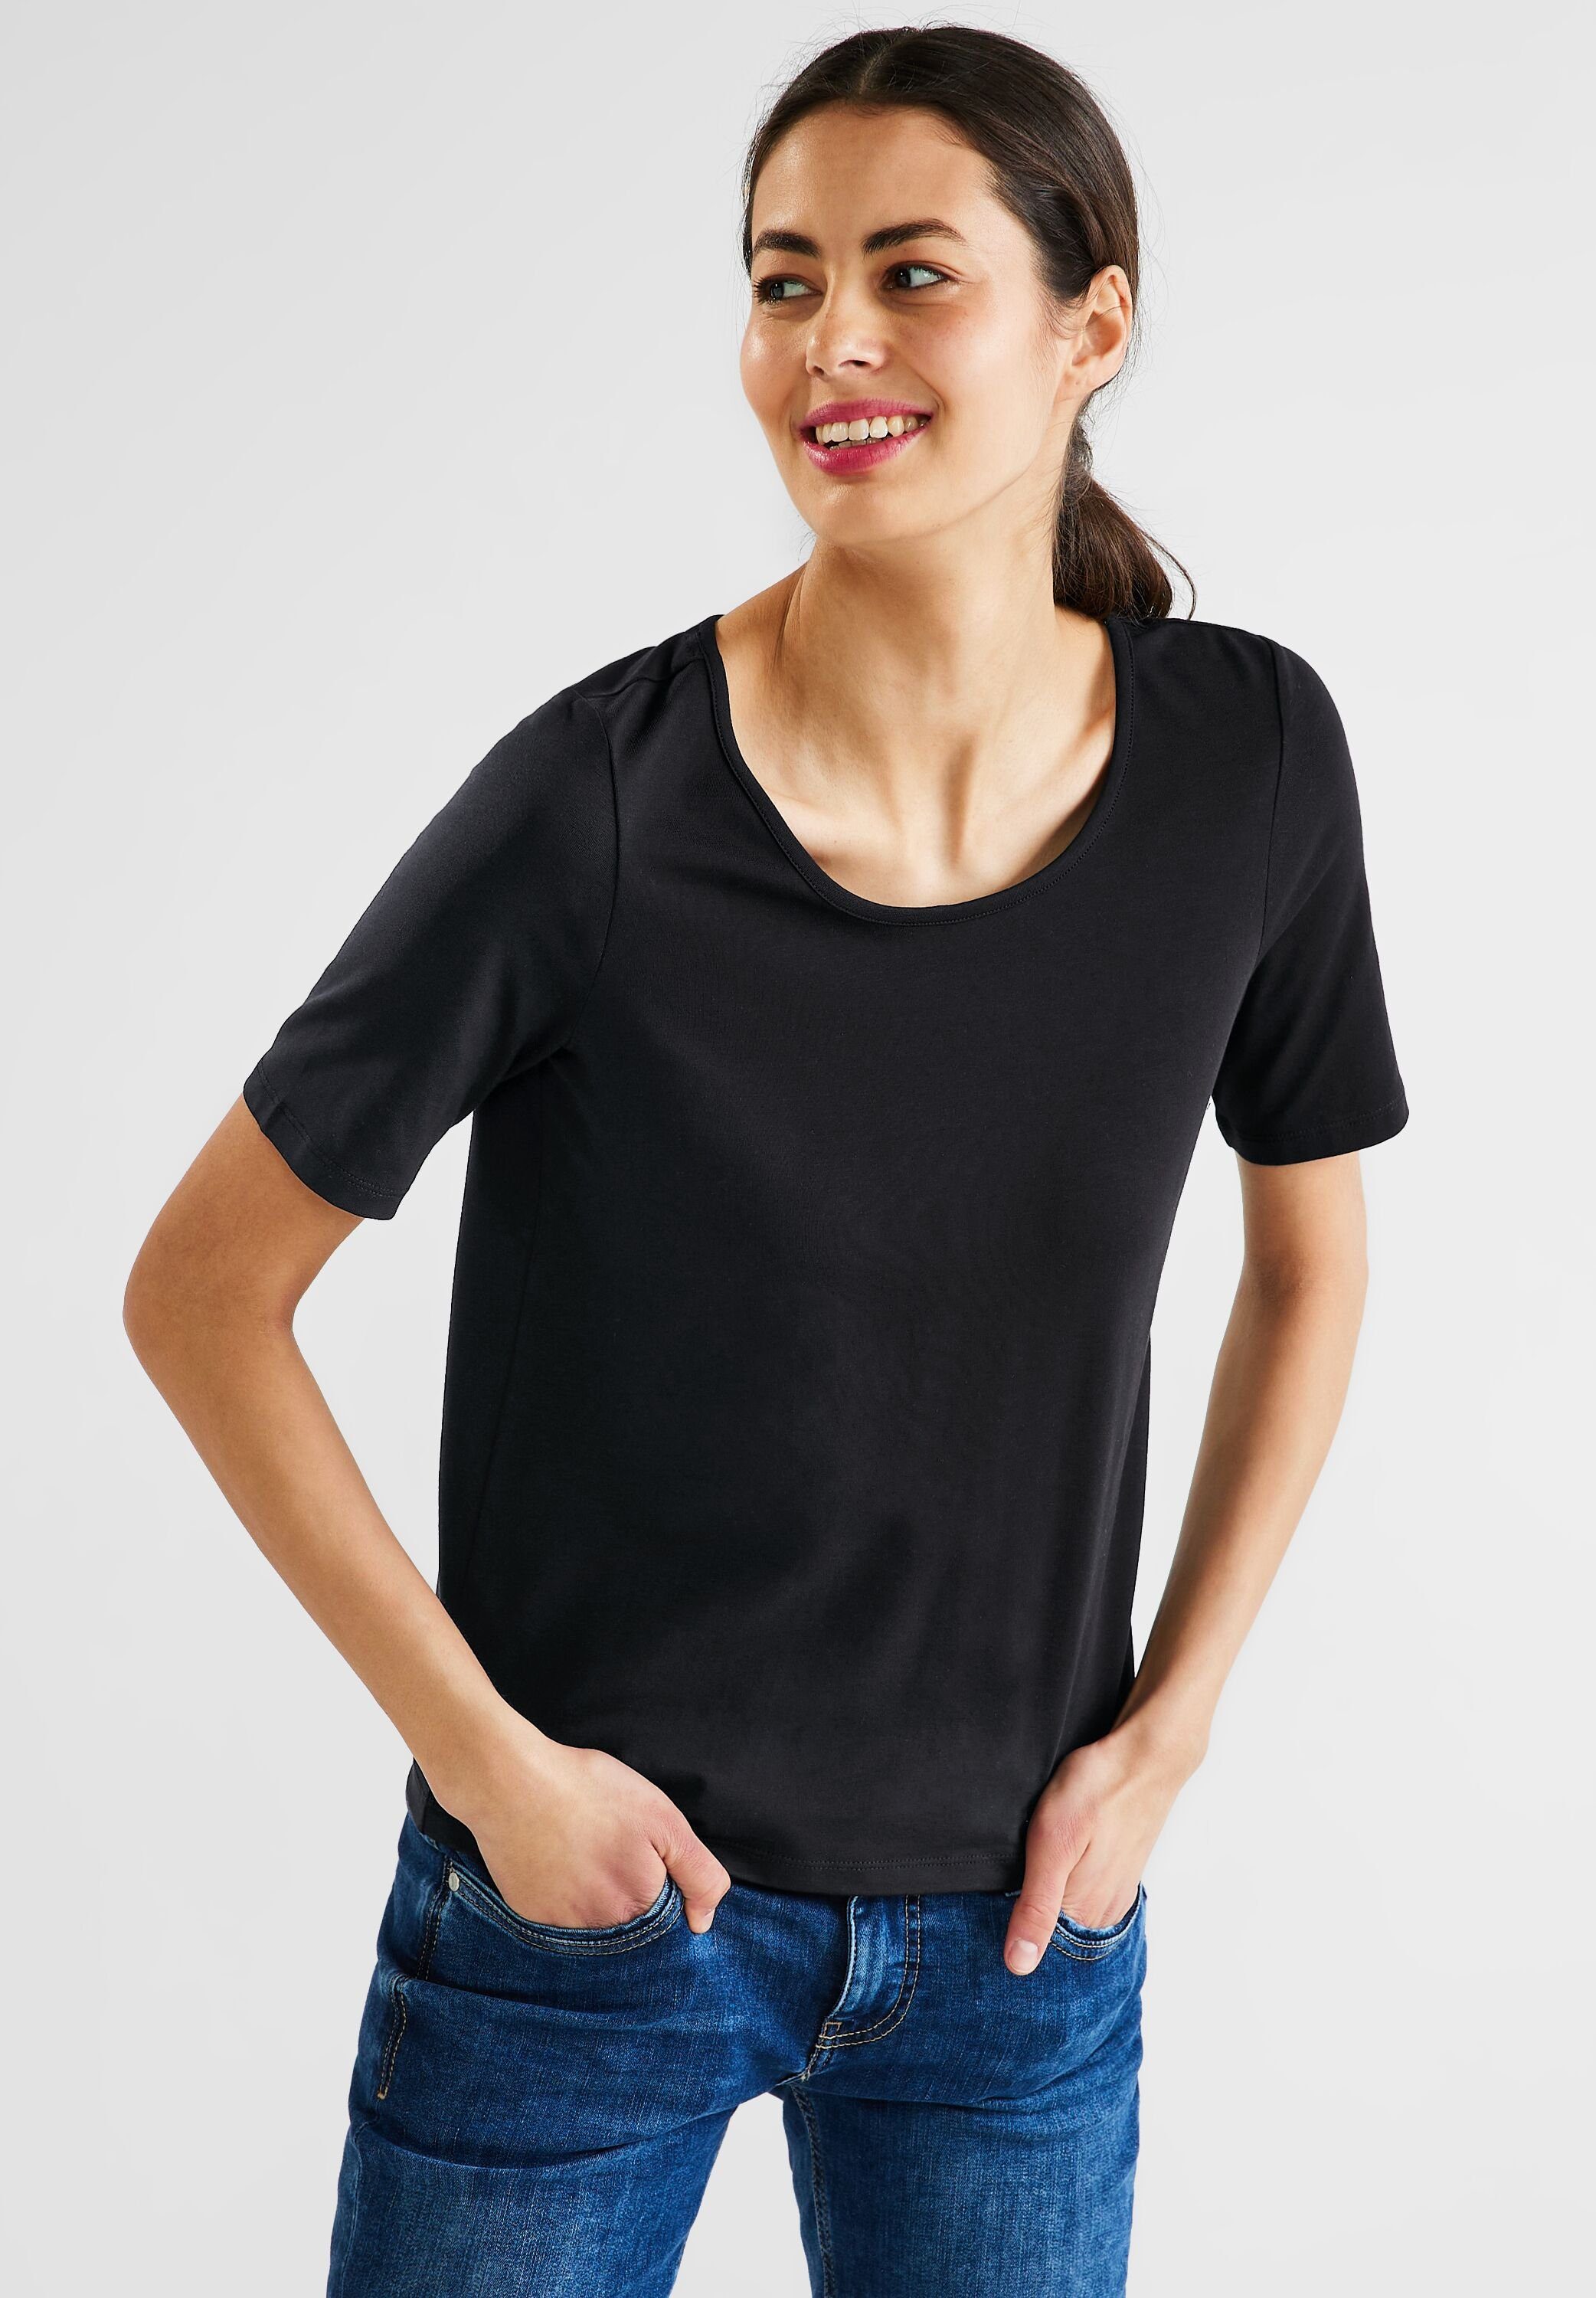 [Normaler Versandhandel im Laden] STREET ONE Unifarbe Black T-Shirt in